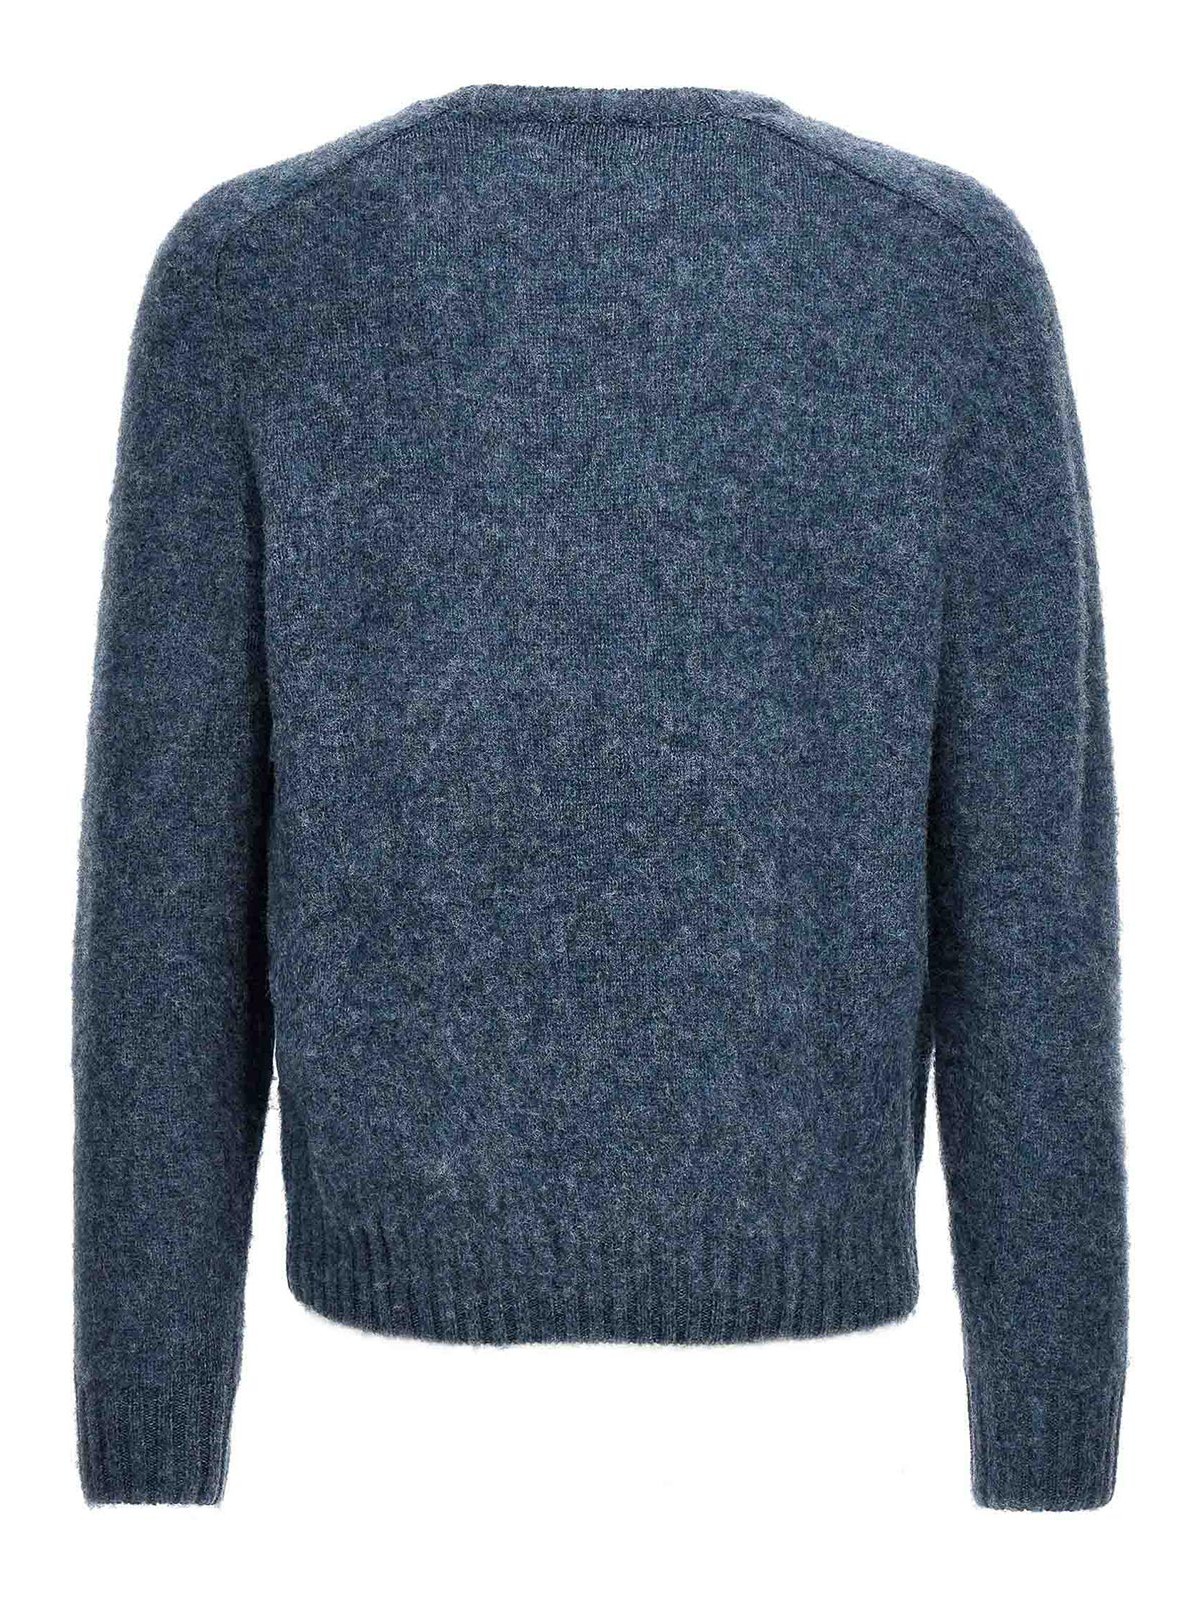 Shop Harmony Shaggy Sweater In Light Blue